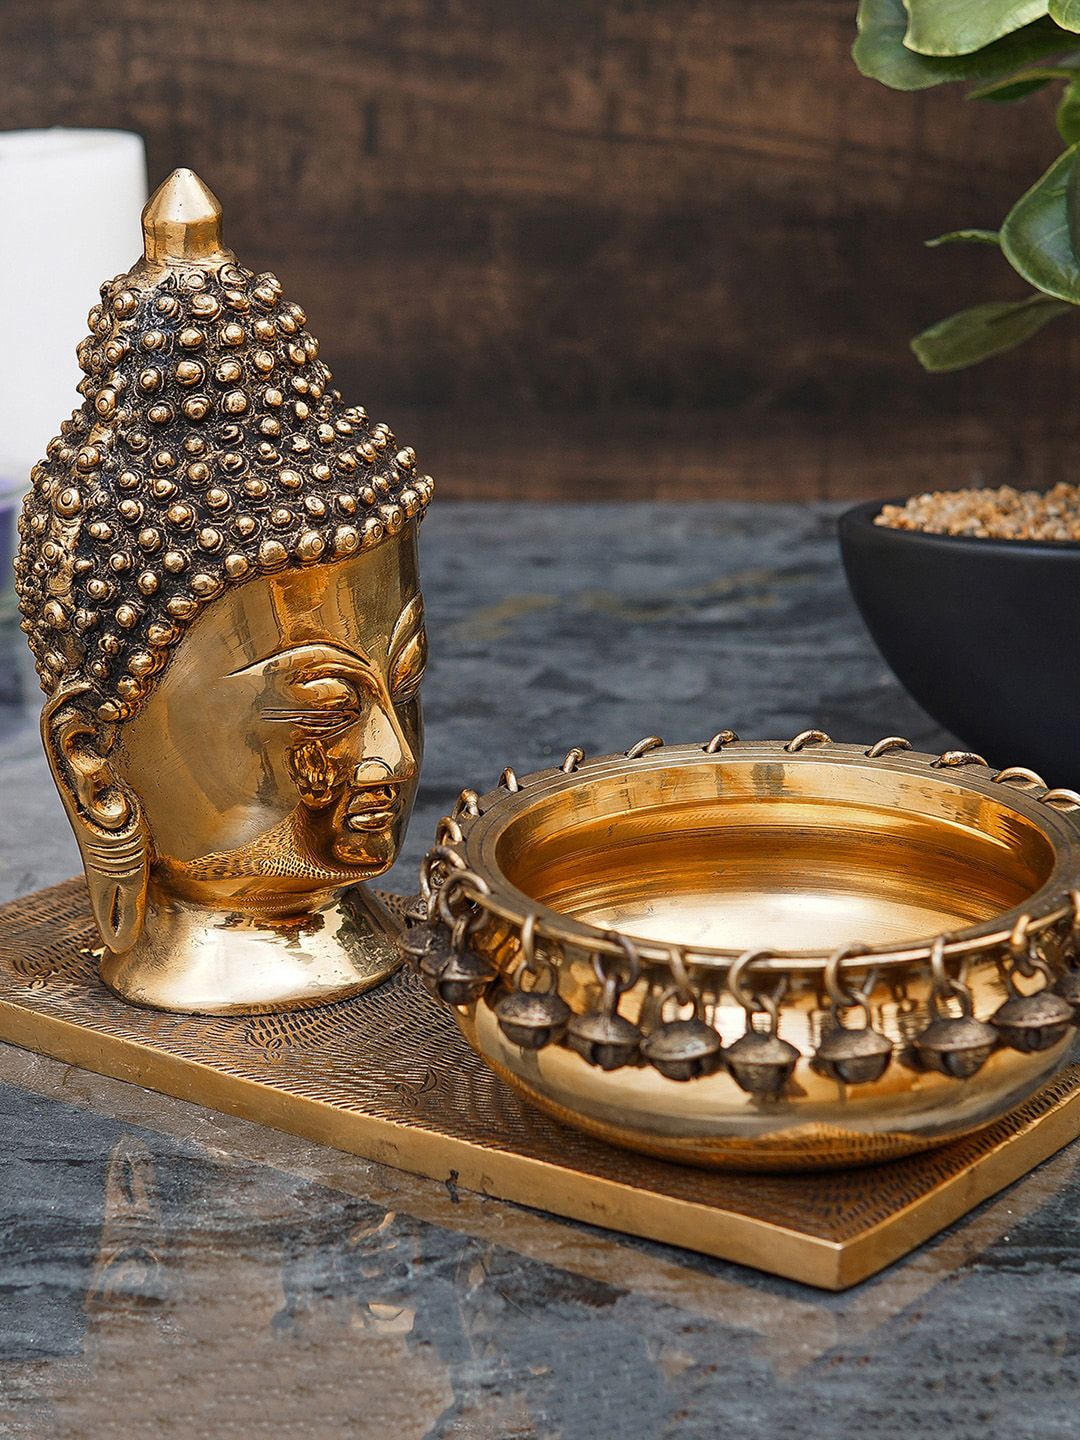 StatueStudio Bronze Buddha Head With Urli Bowl Showpiece Price in India